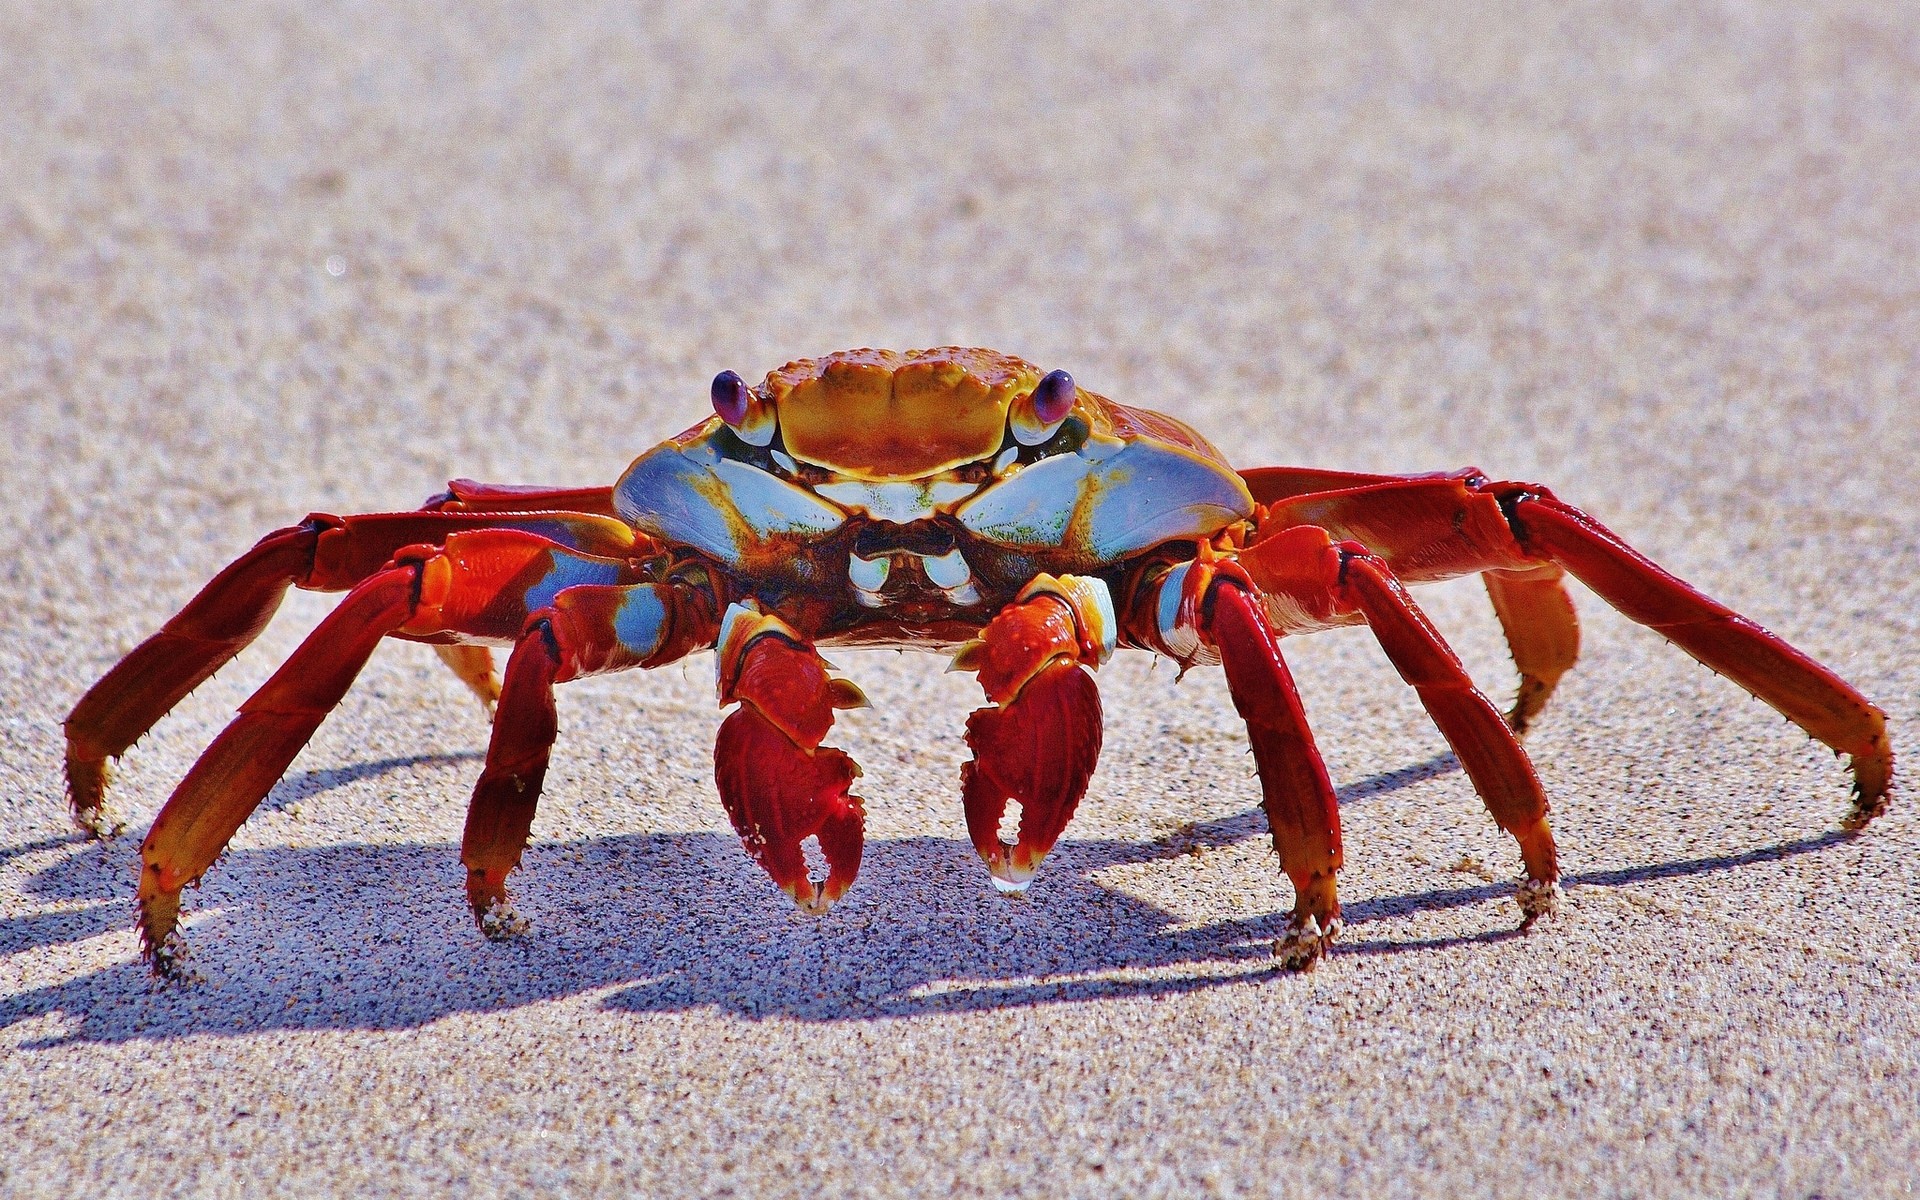 animals crab invertebrate crustacean sand beach claw shell nature sea shellfish ocean wildlife desert seashore outdoors insect one lobster